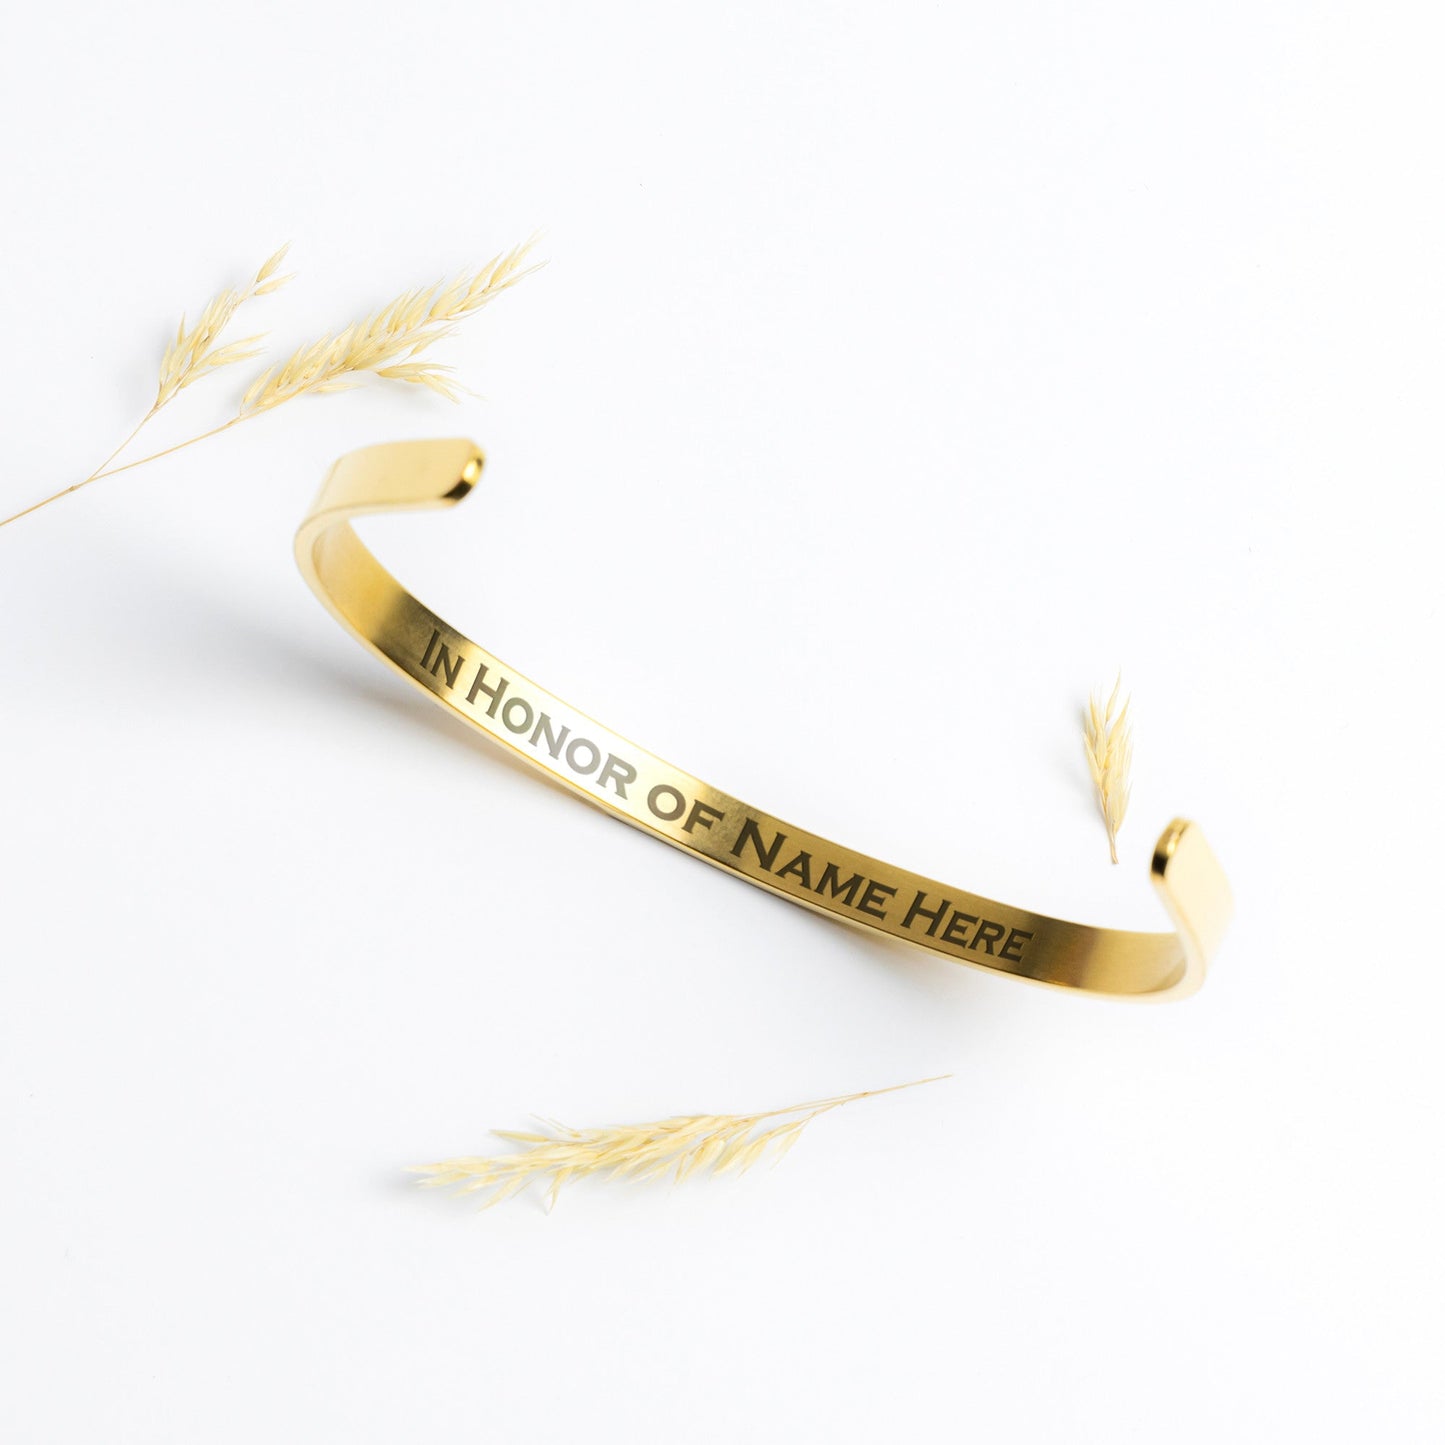 Personalized Bone Cancer Awareness Cuff Bracelet |x|